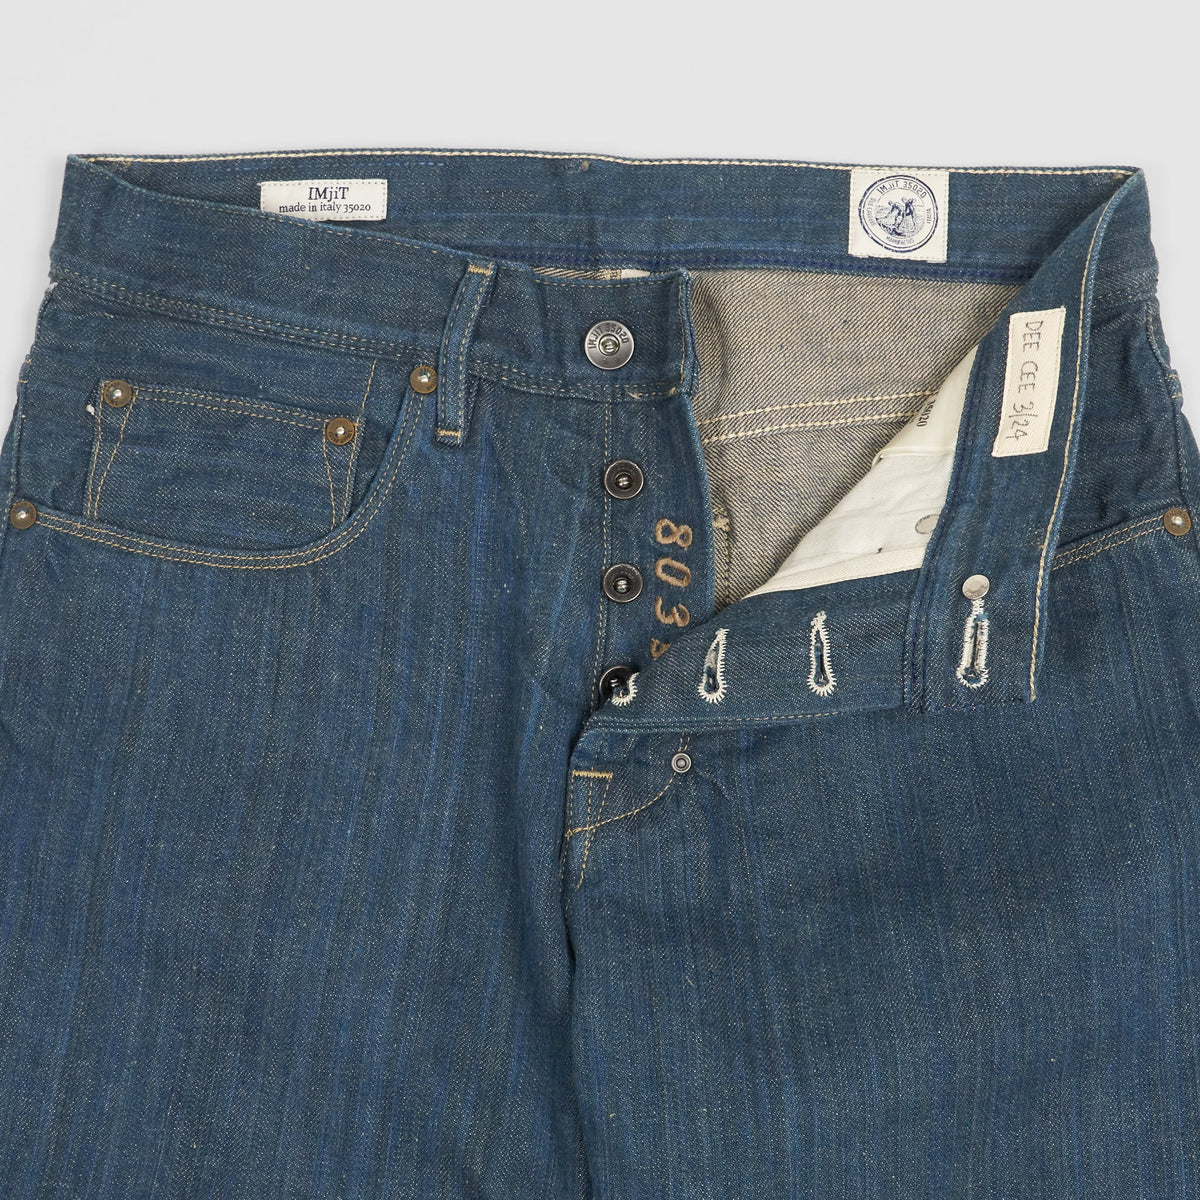 IMjiT 35020 Natural Indigo Jeans